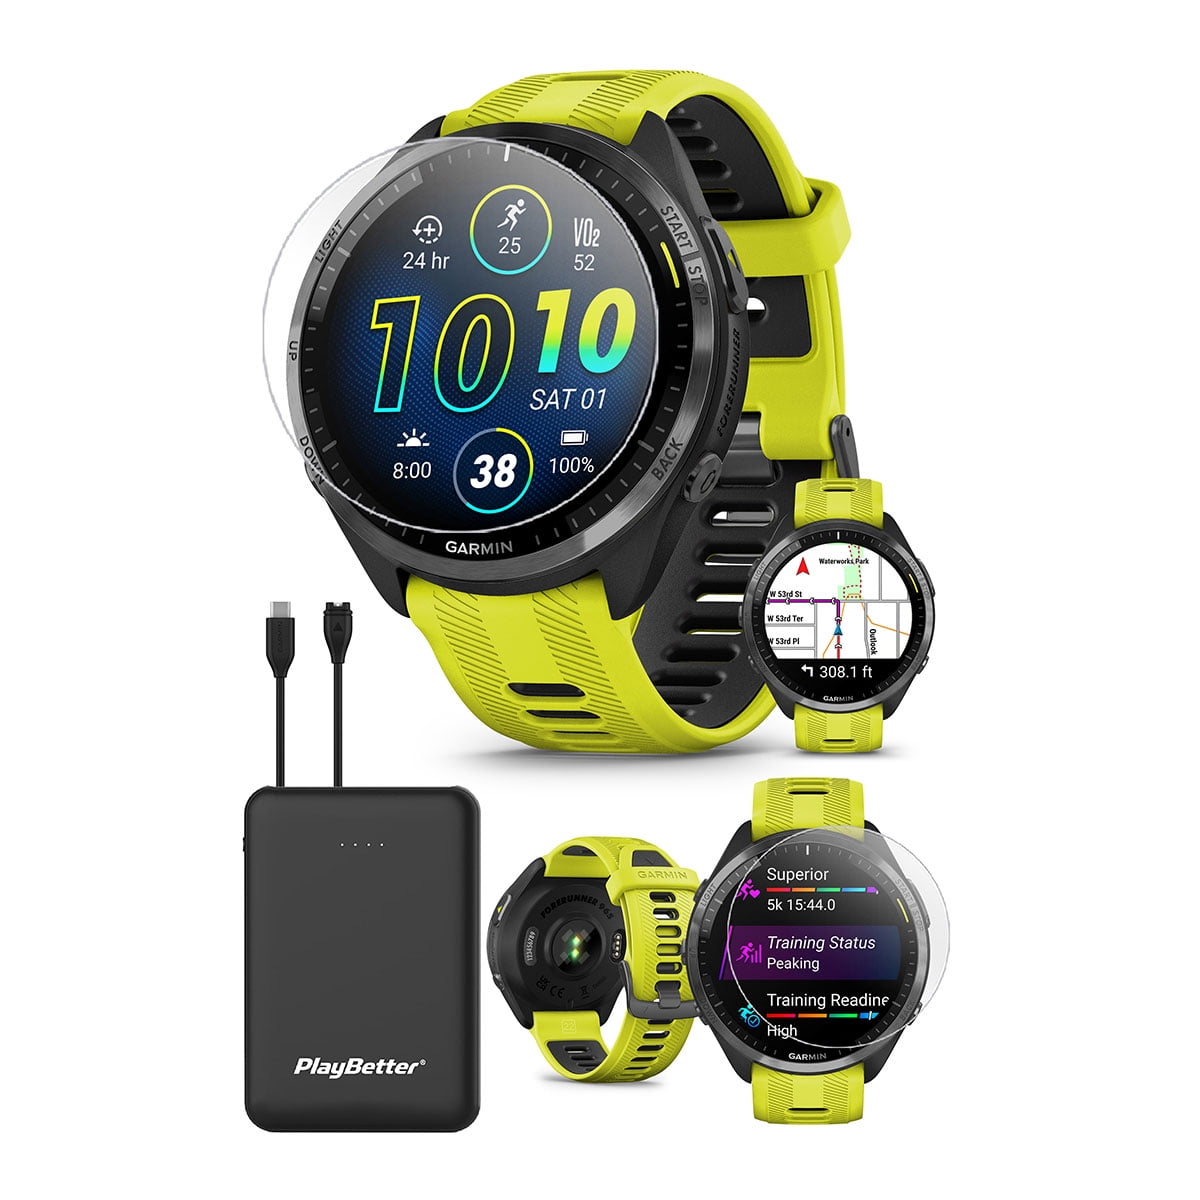 Engager Men søsyge Garmin Forerunner 965 (Amp Yellow/Black) Premium Running & Triathlon GPS  Smartwatch Bundle with PlayBetter HD Screen Protectors & Portable Charger -  Walmart.com